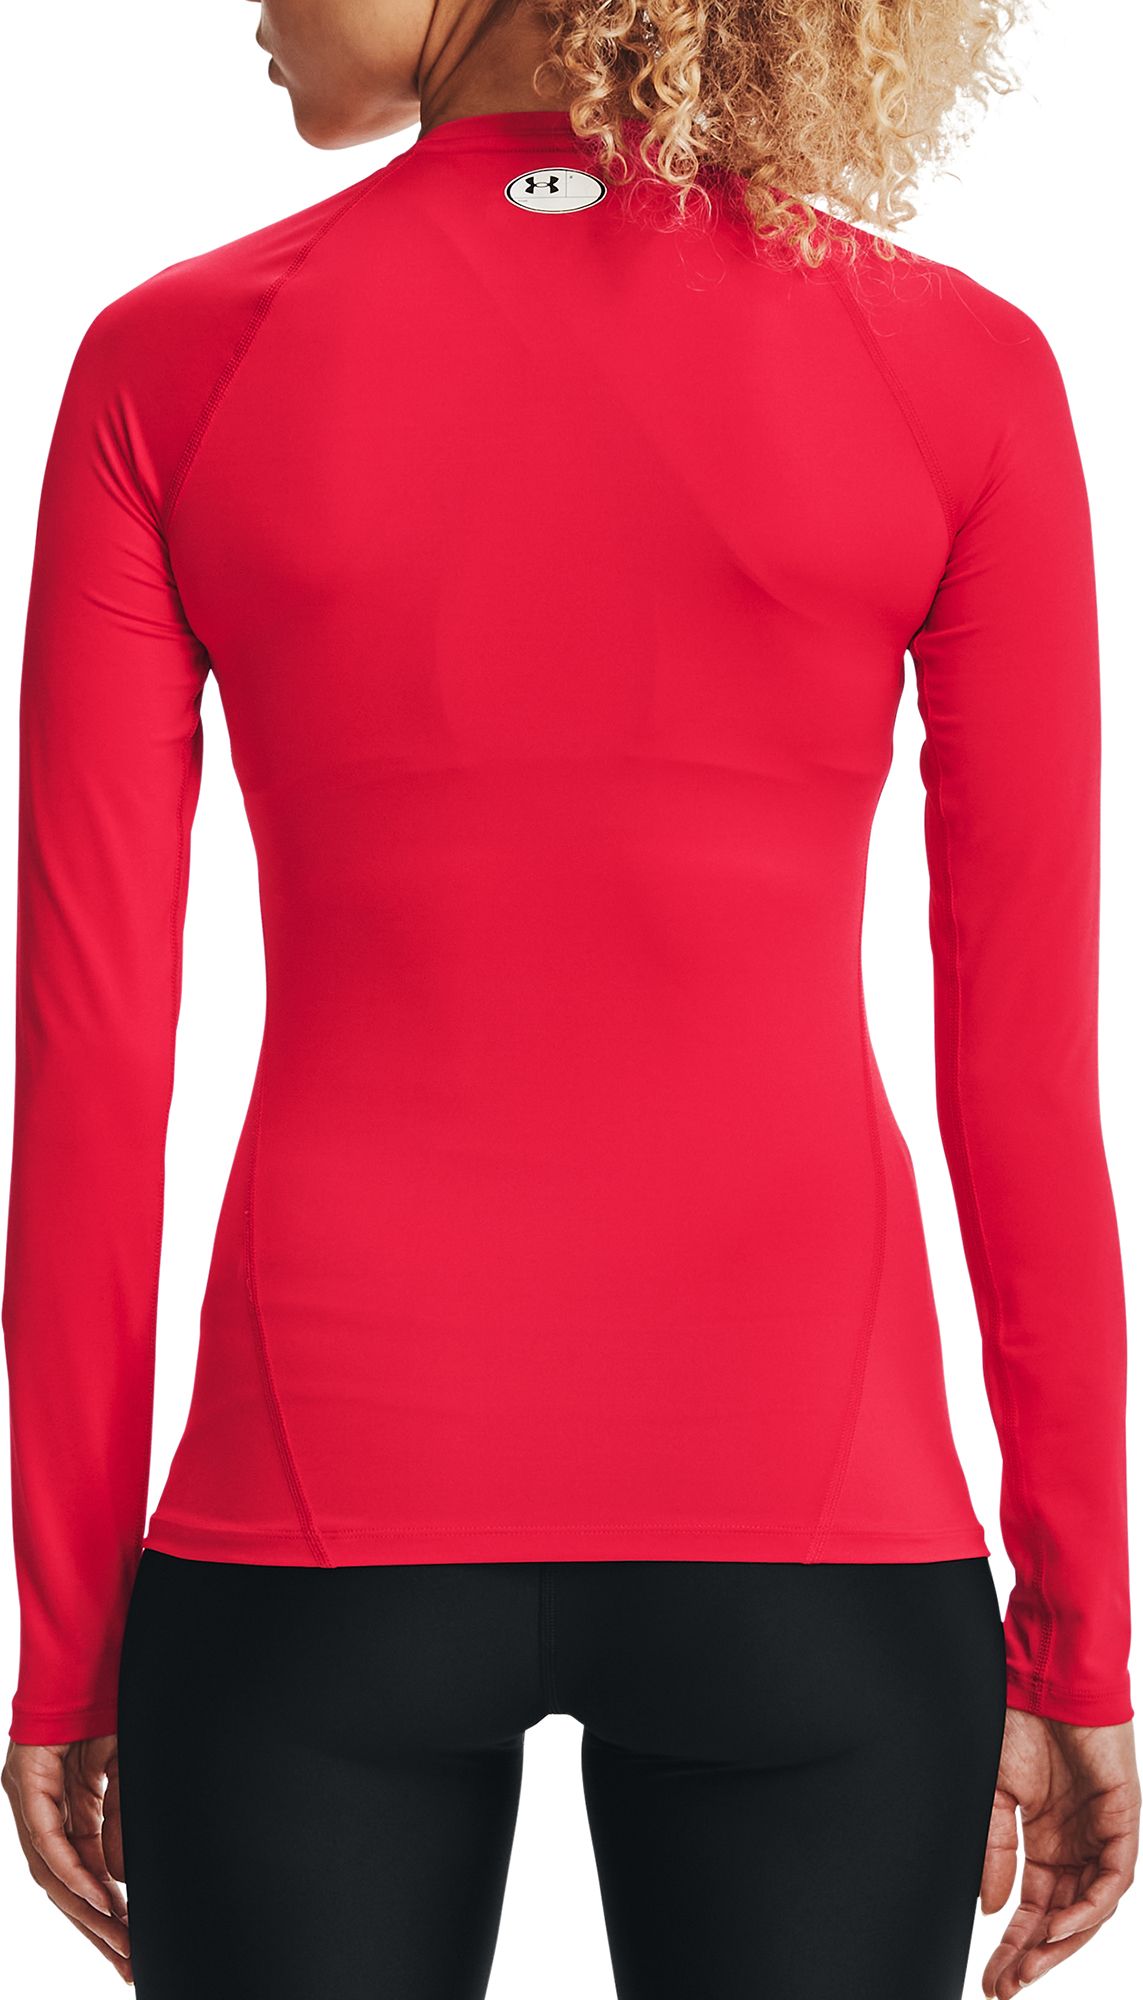 Dick's Sporting Goods Under Armour Women's HeatGear Compression Long-Sleeve  Shirt